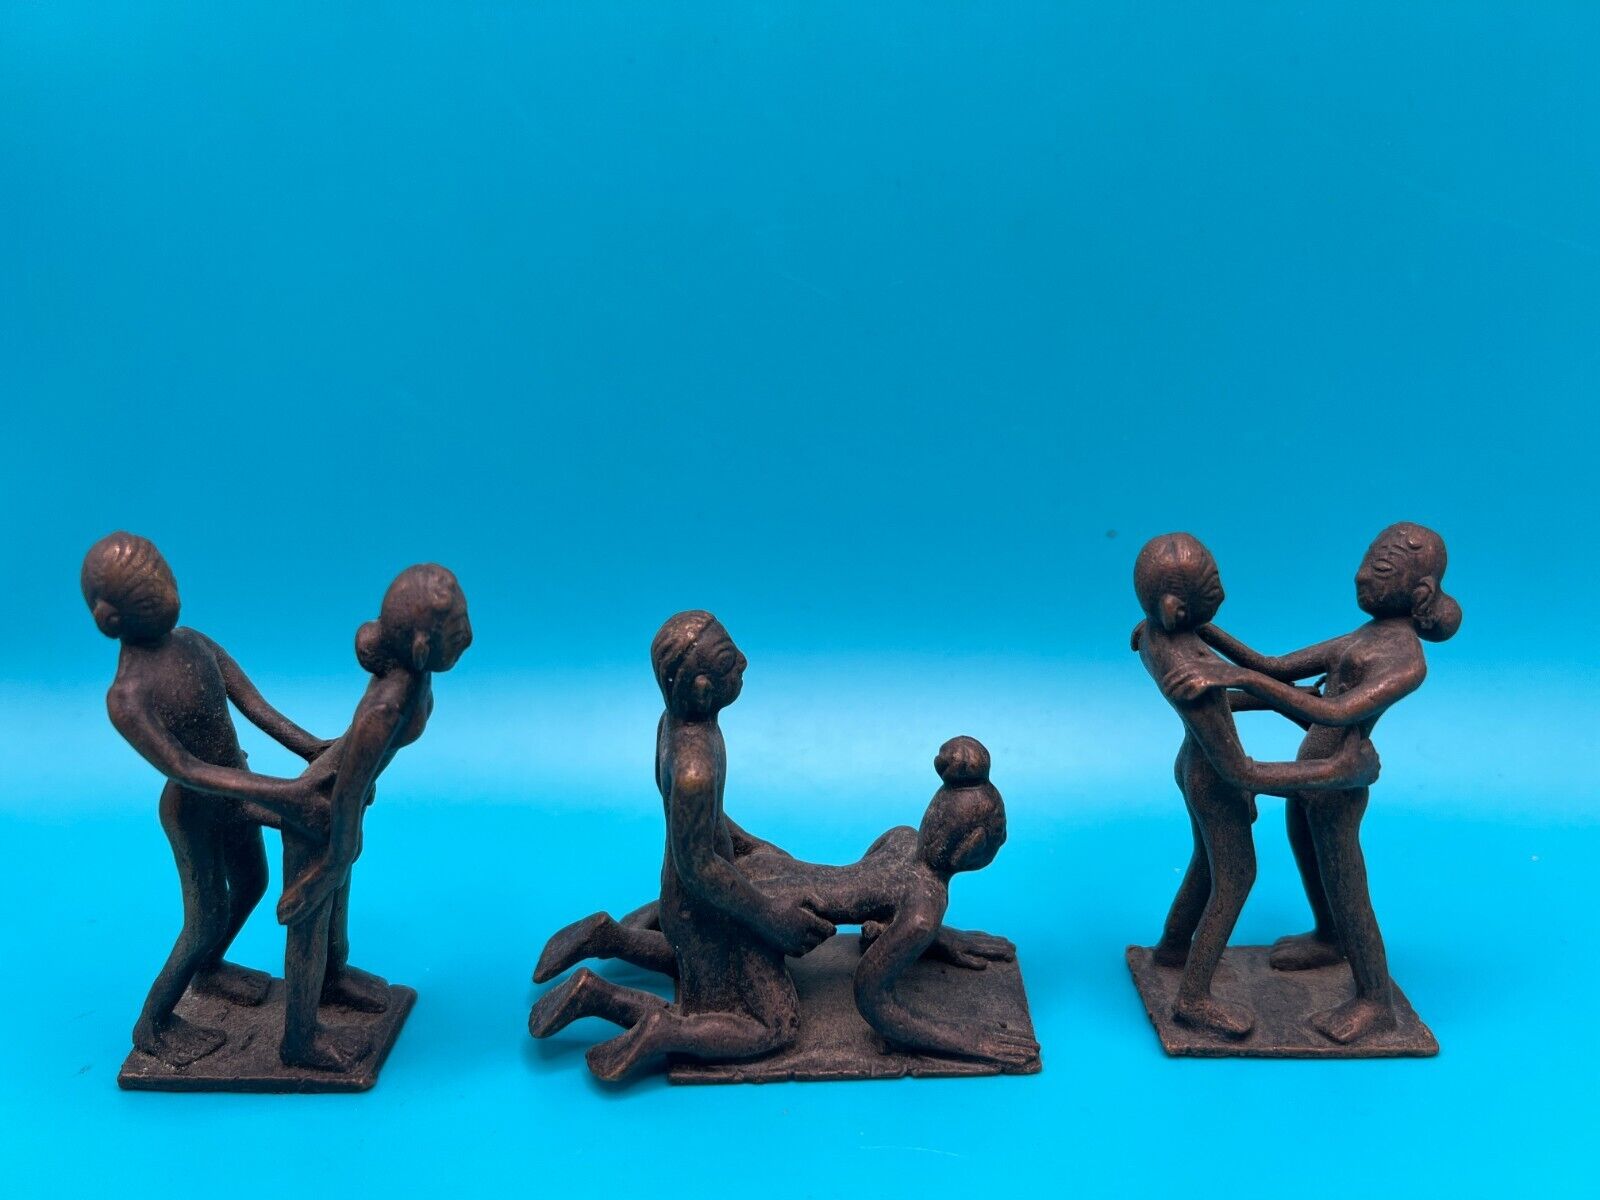 Lot Of 3 Vintage Brass or Bronze Kama Sutra Erotic Miniature Sculptures Figures